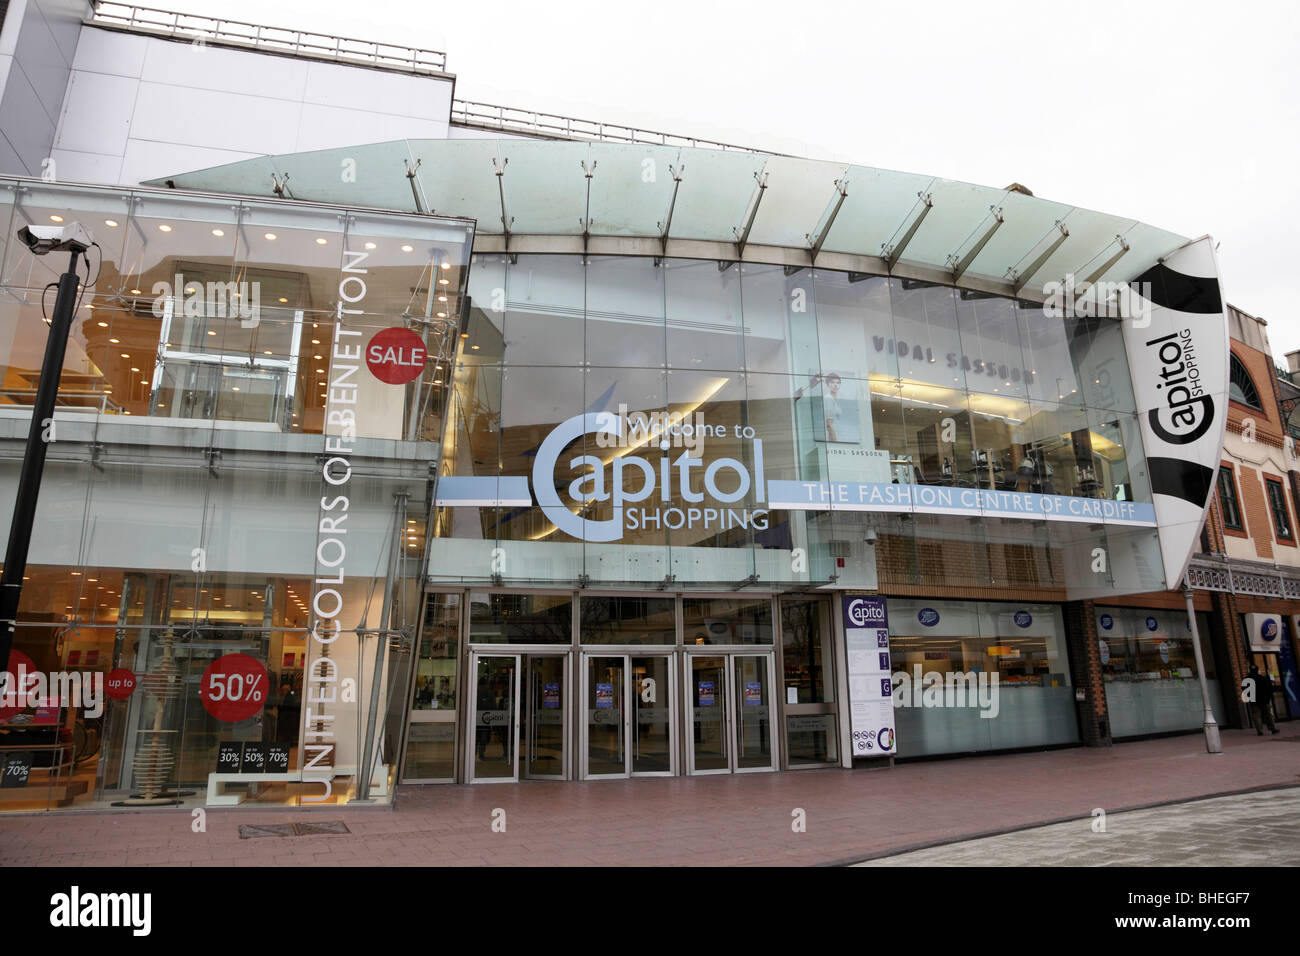 Eingang zum Kapital Shopping Center auf Queens street Cardiff Wales uk Stockfoto